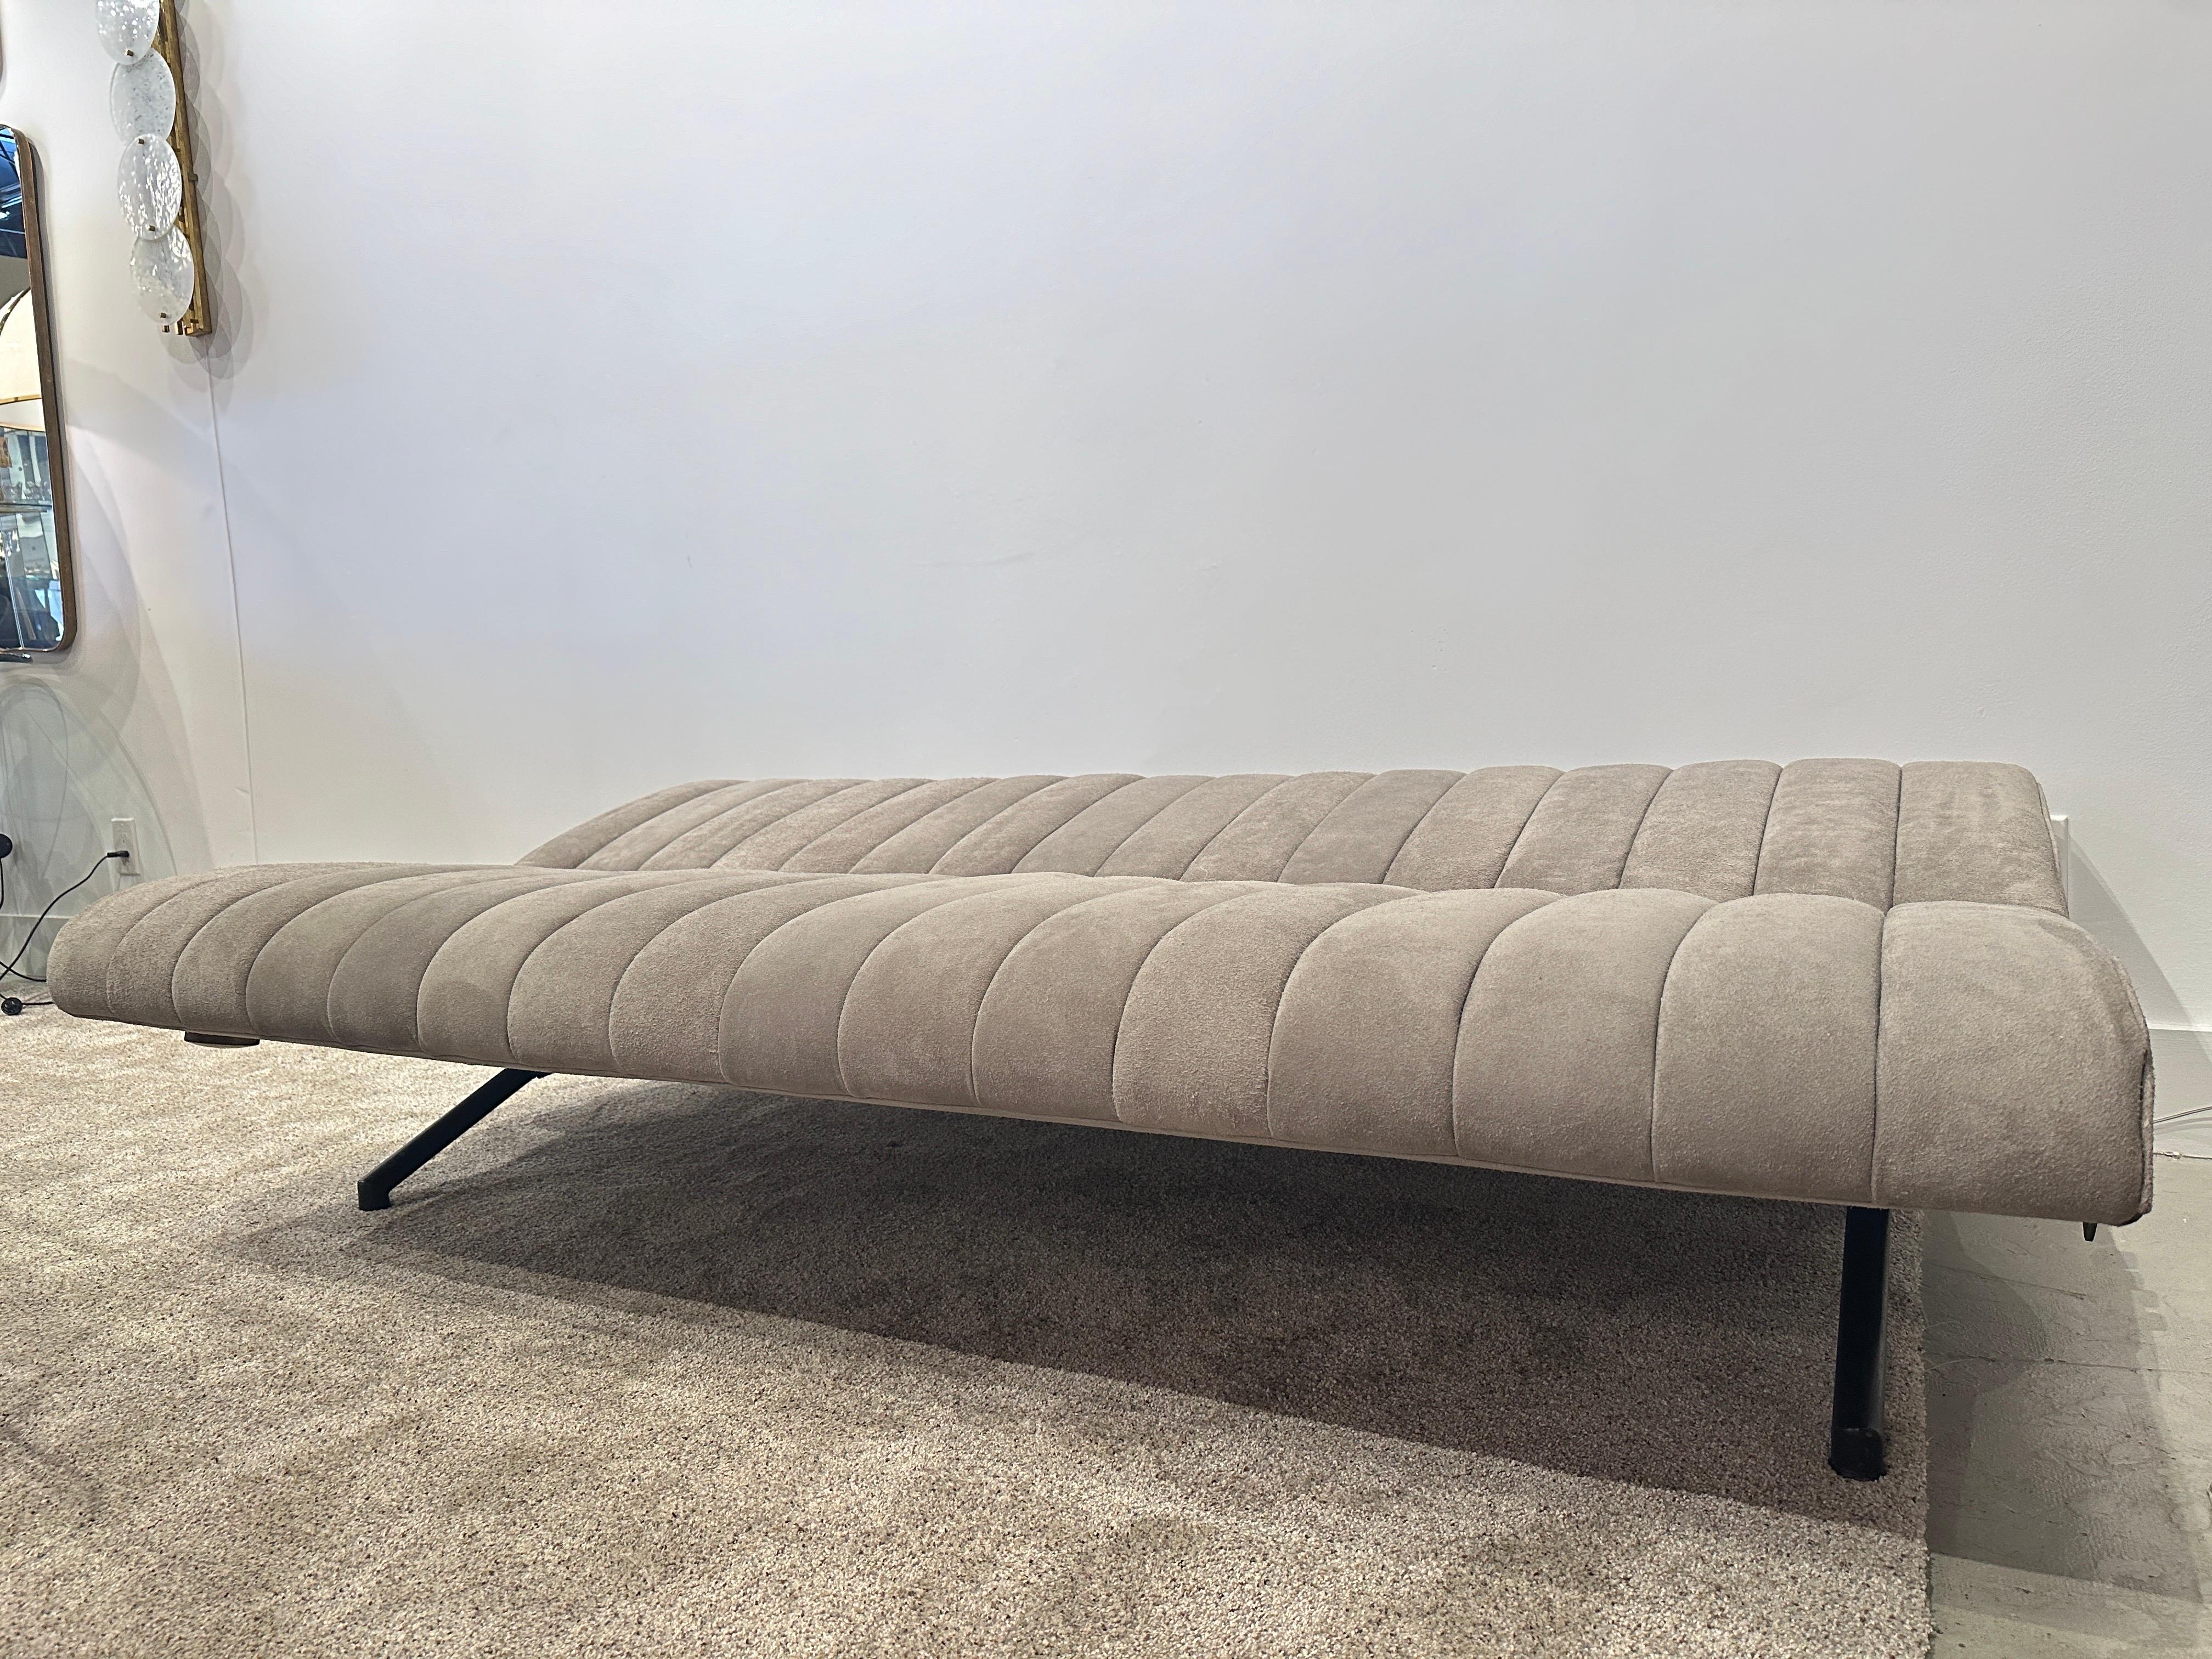 Osvaldo Borsani for Tecno 'D70' Sofa in Gray Suede Leather For Sale 5